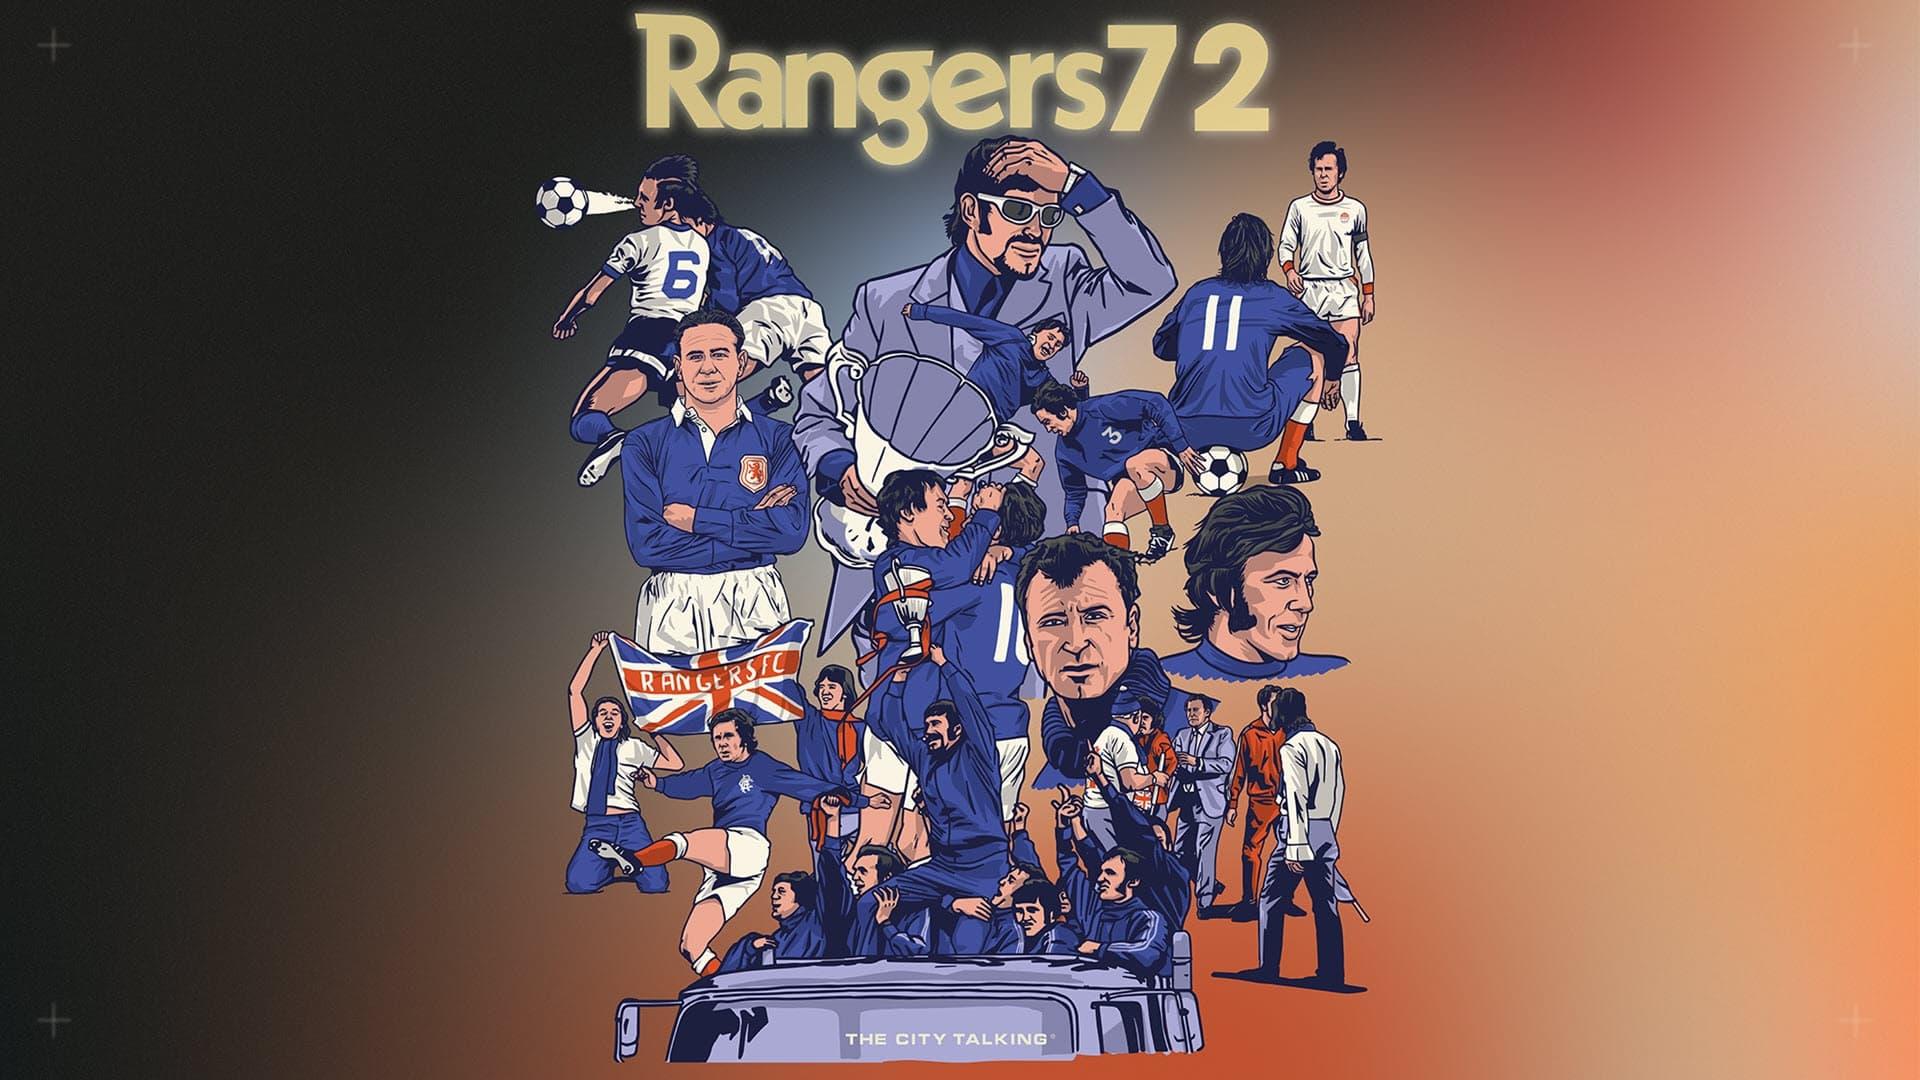 Rangers72 backdrop